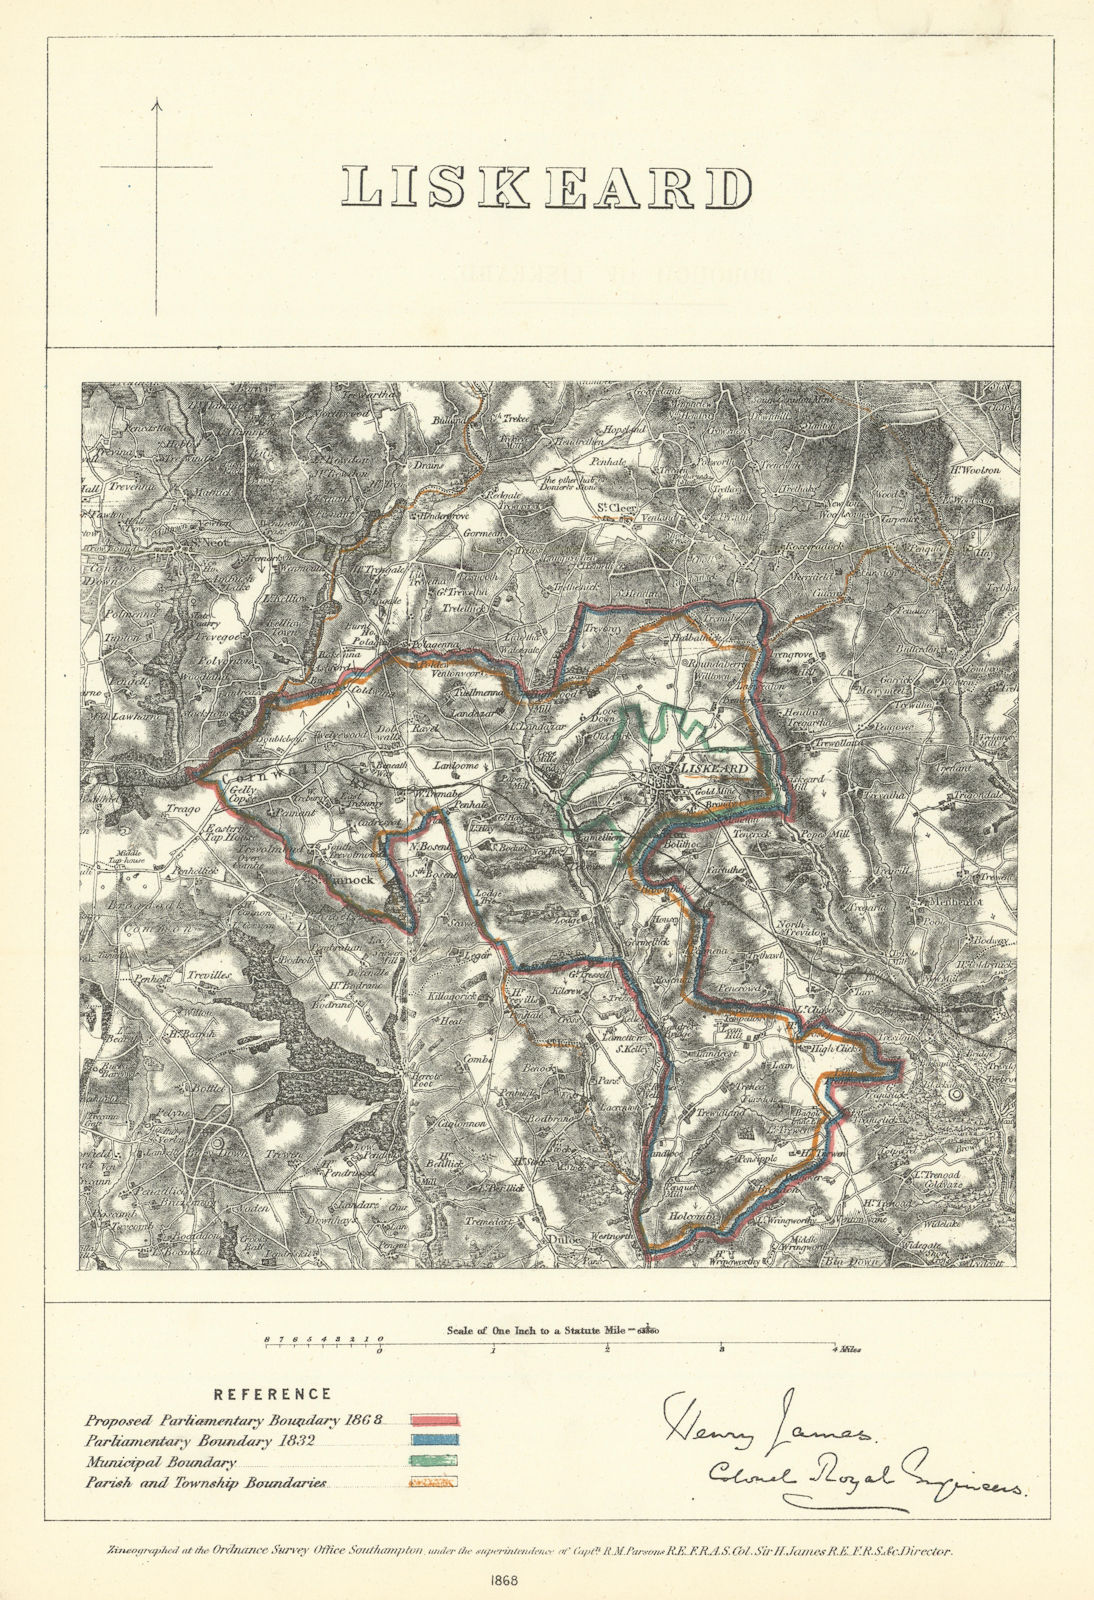 Liskeard, Cornwall. JAMES. Parliamentary Boundary Commission 1868 old map